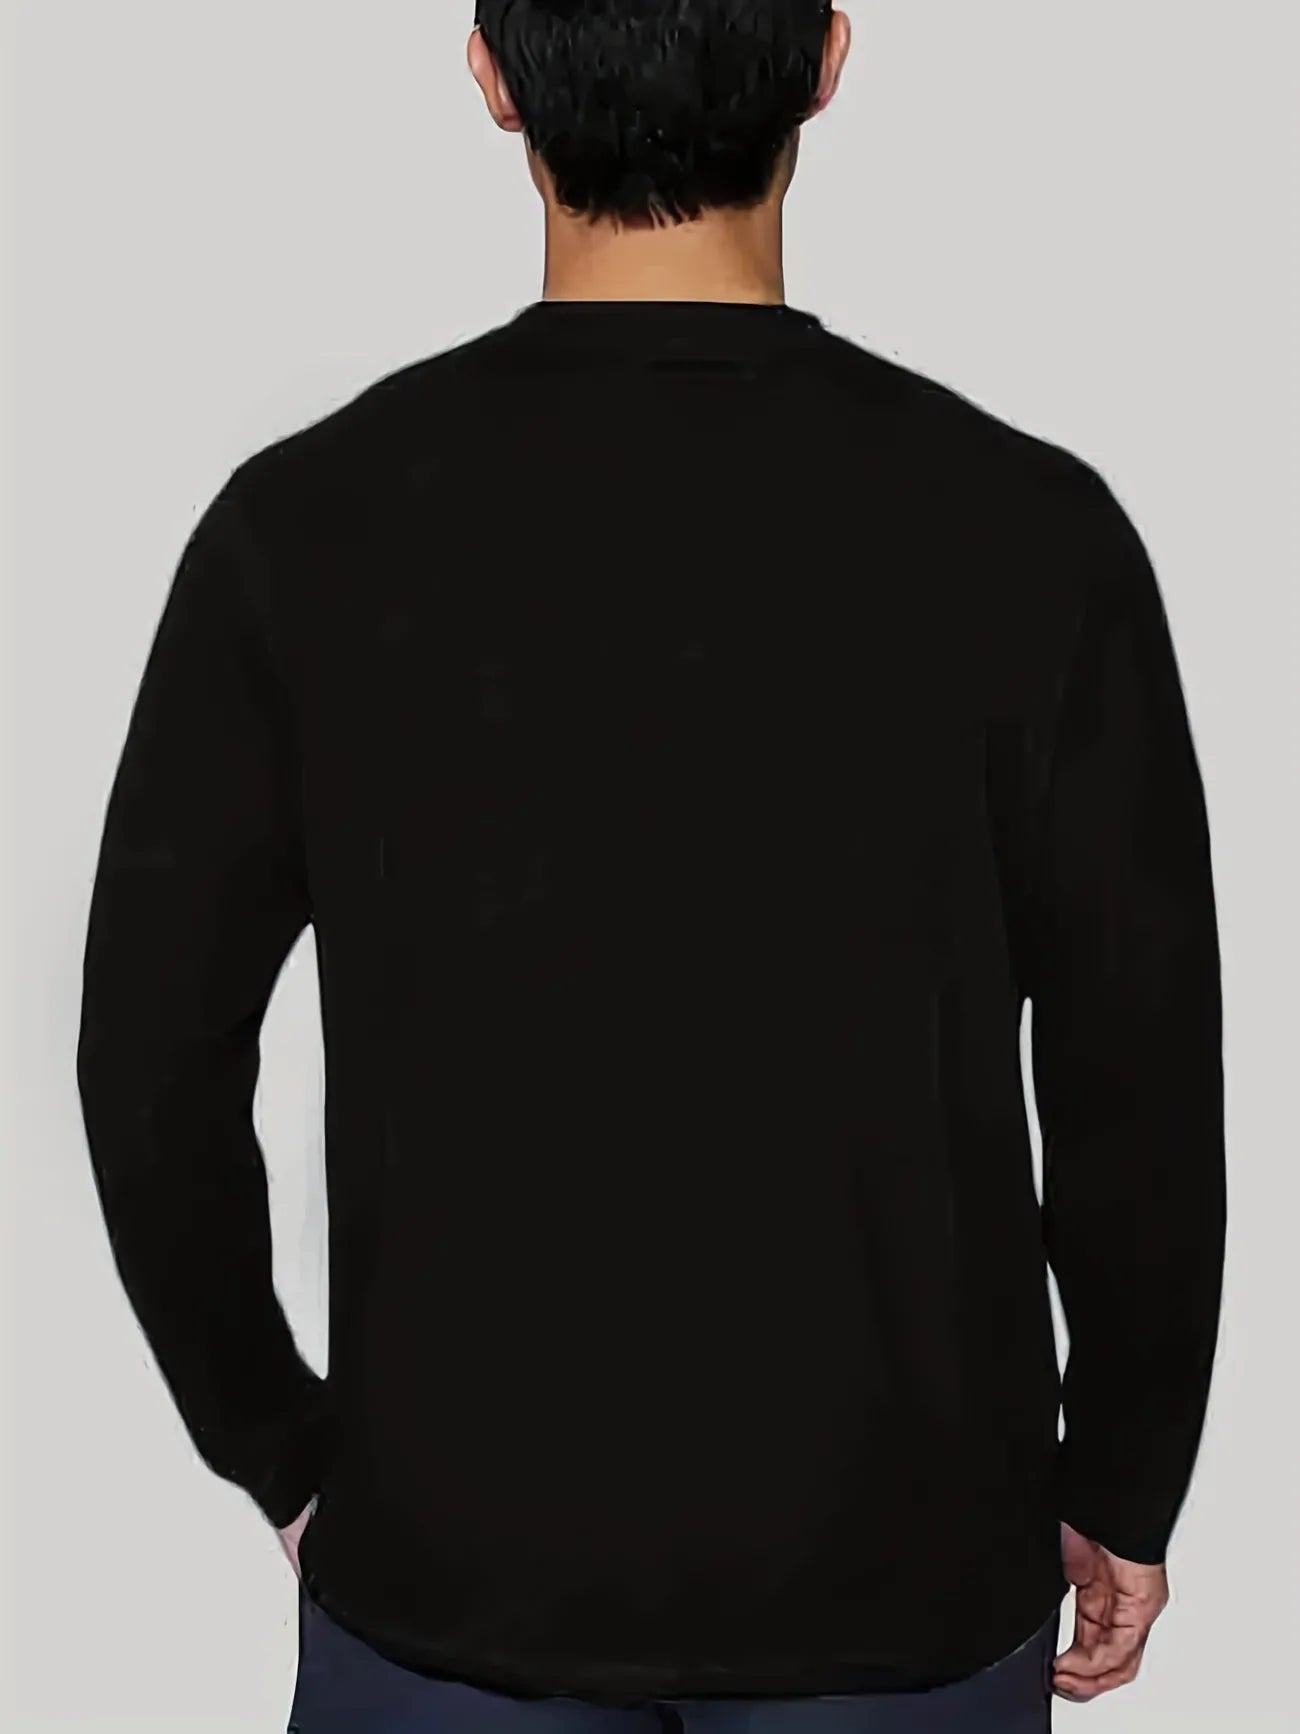 Mens Cotton Sticker Printed Long Sleeve T-Shirt by Tee Tall LSTTMPS10 - Black